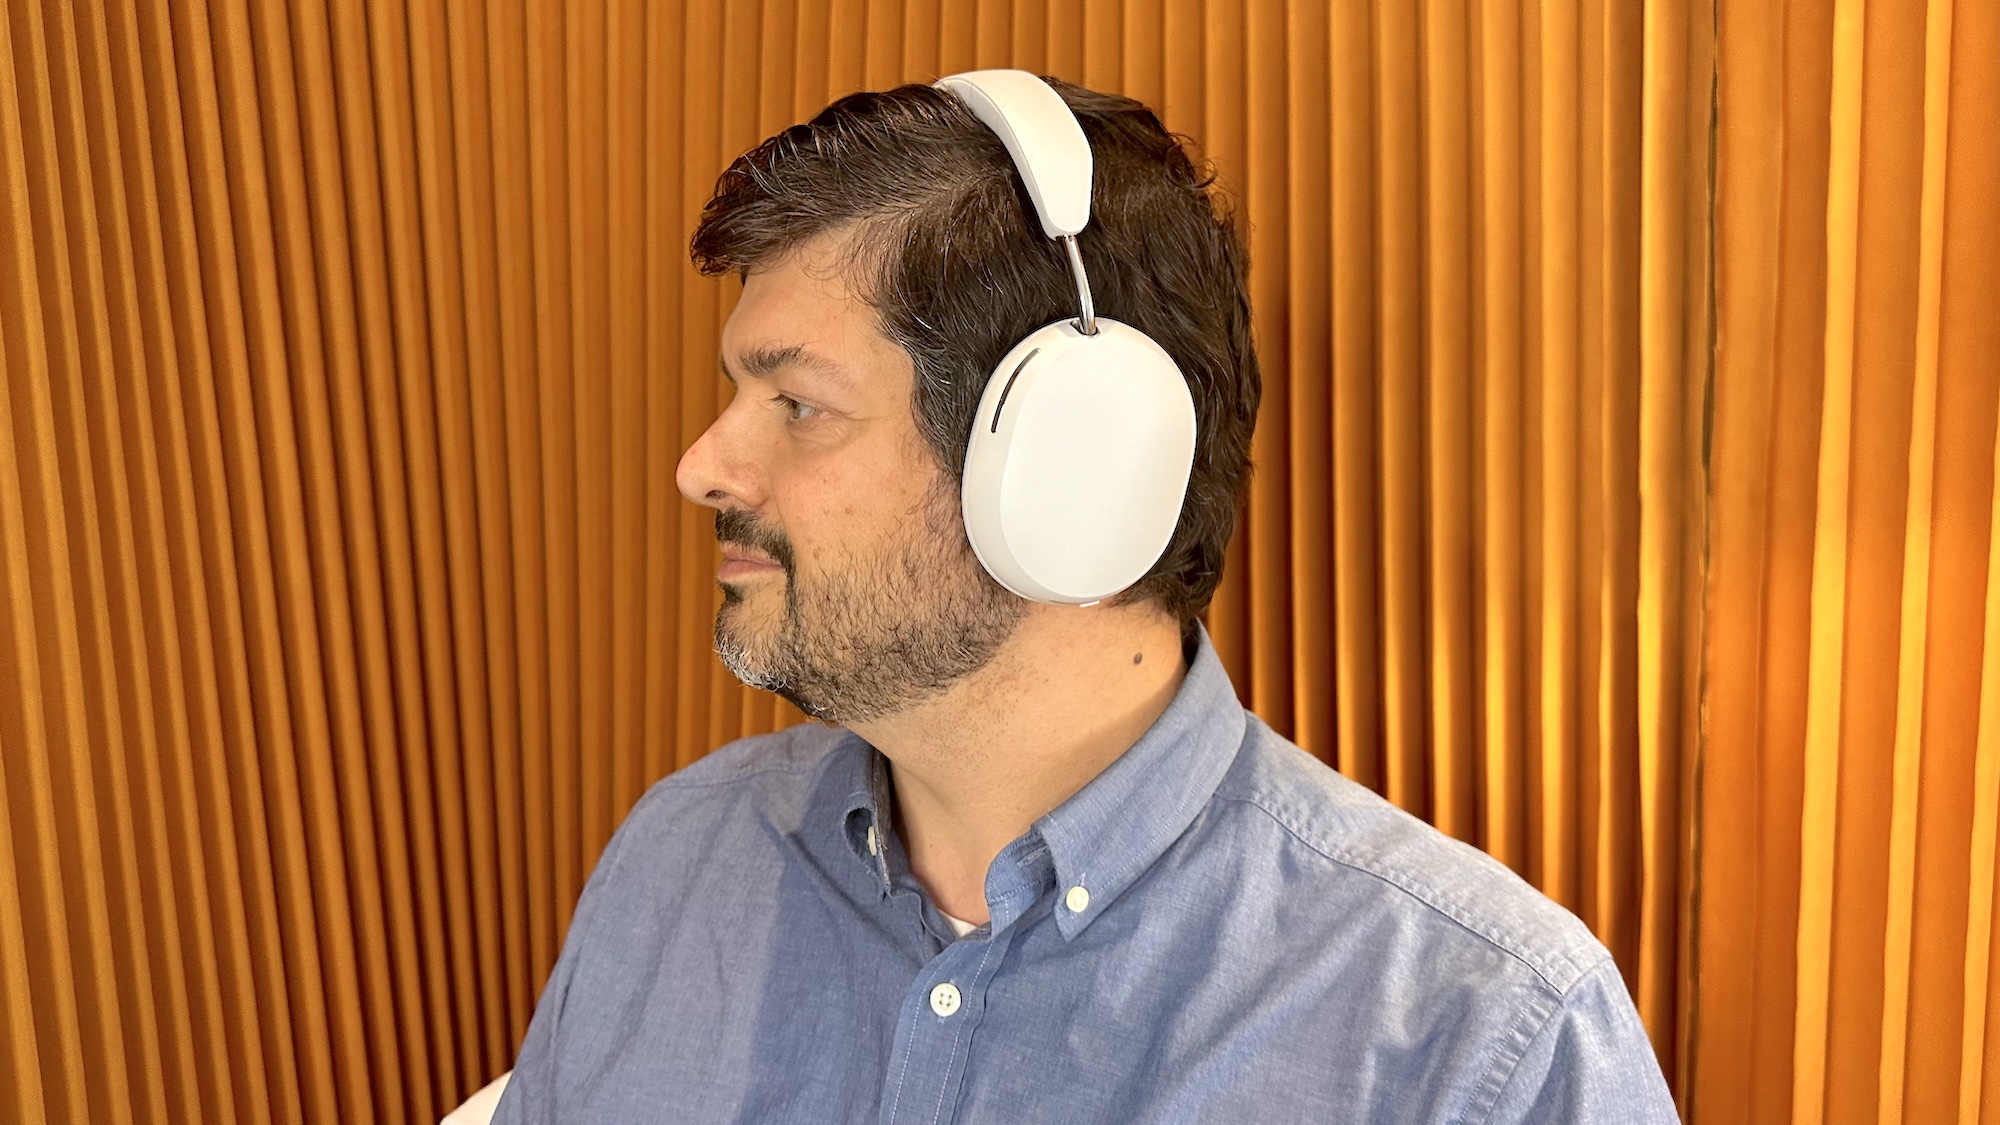 Sonos Ace headphones on man's head